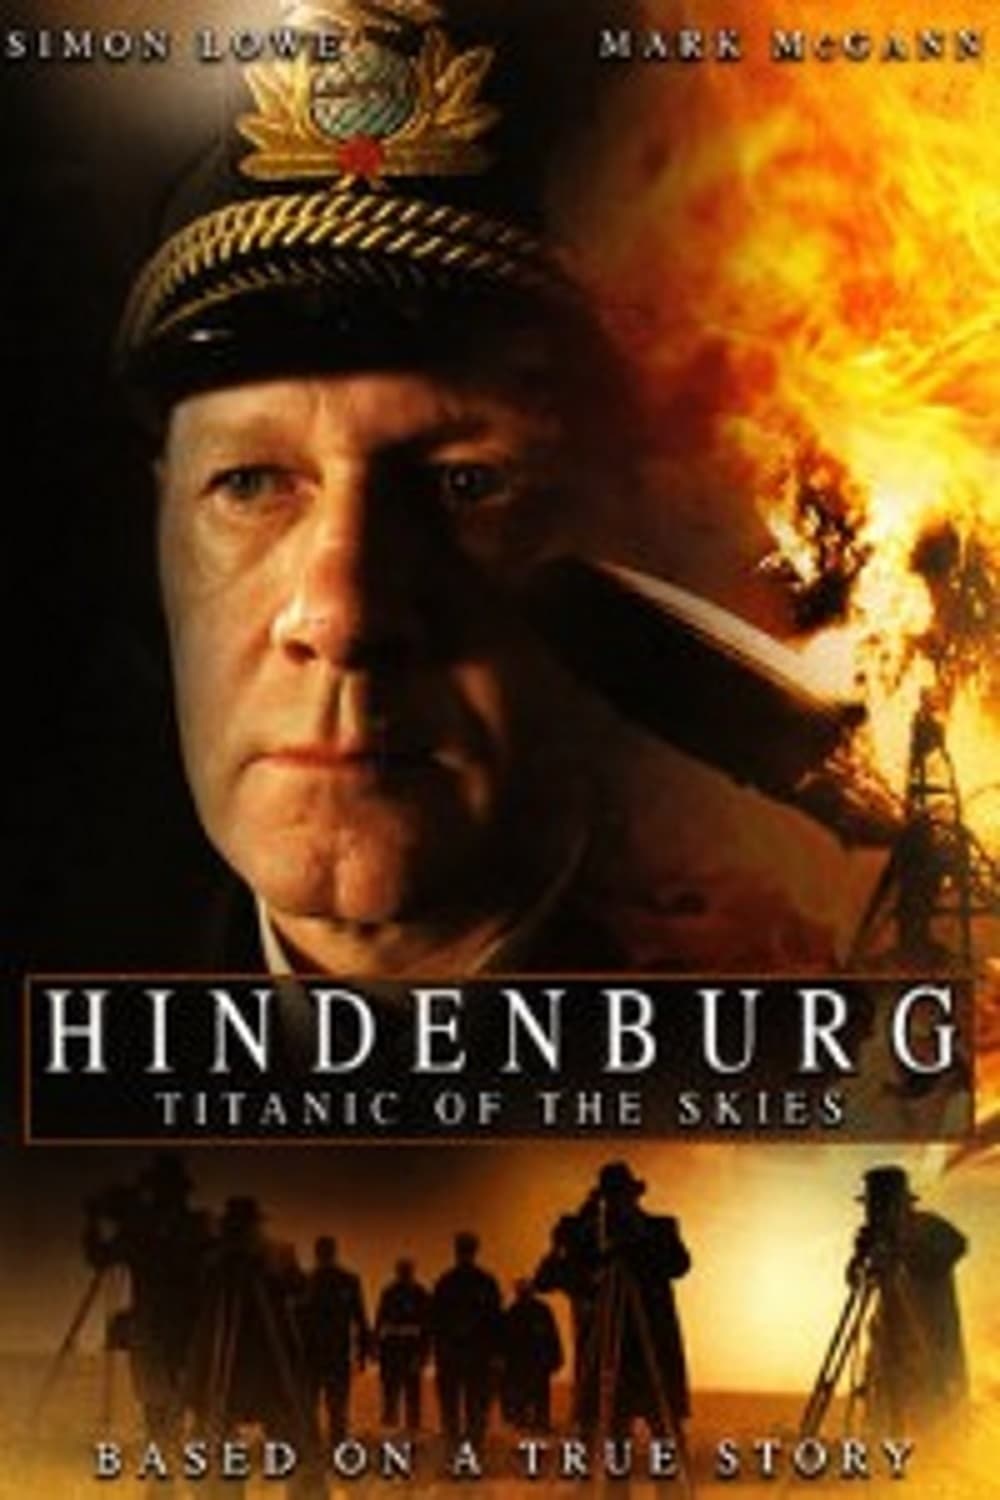 Hindenburg: Titanic of the Skies (2007)